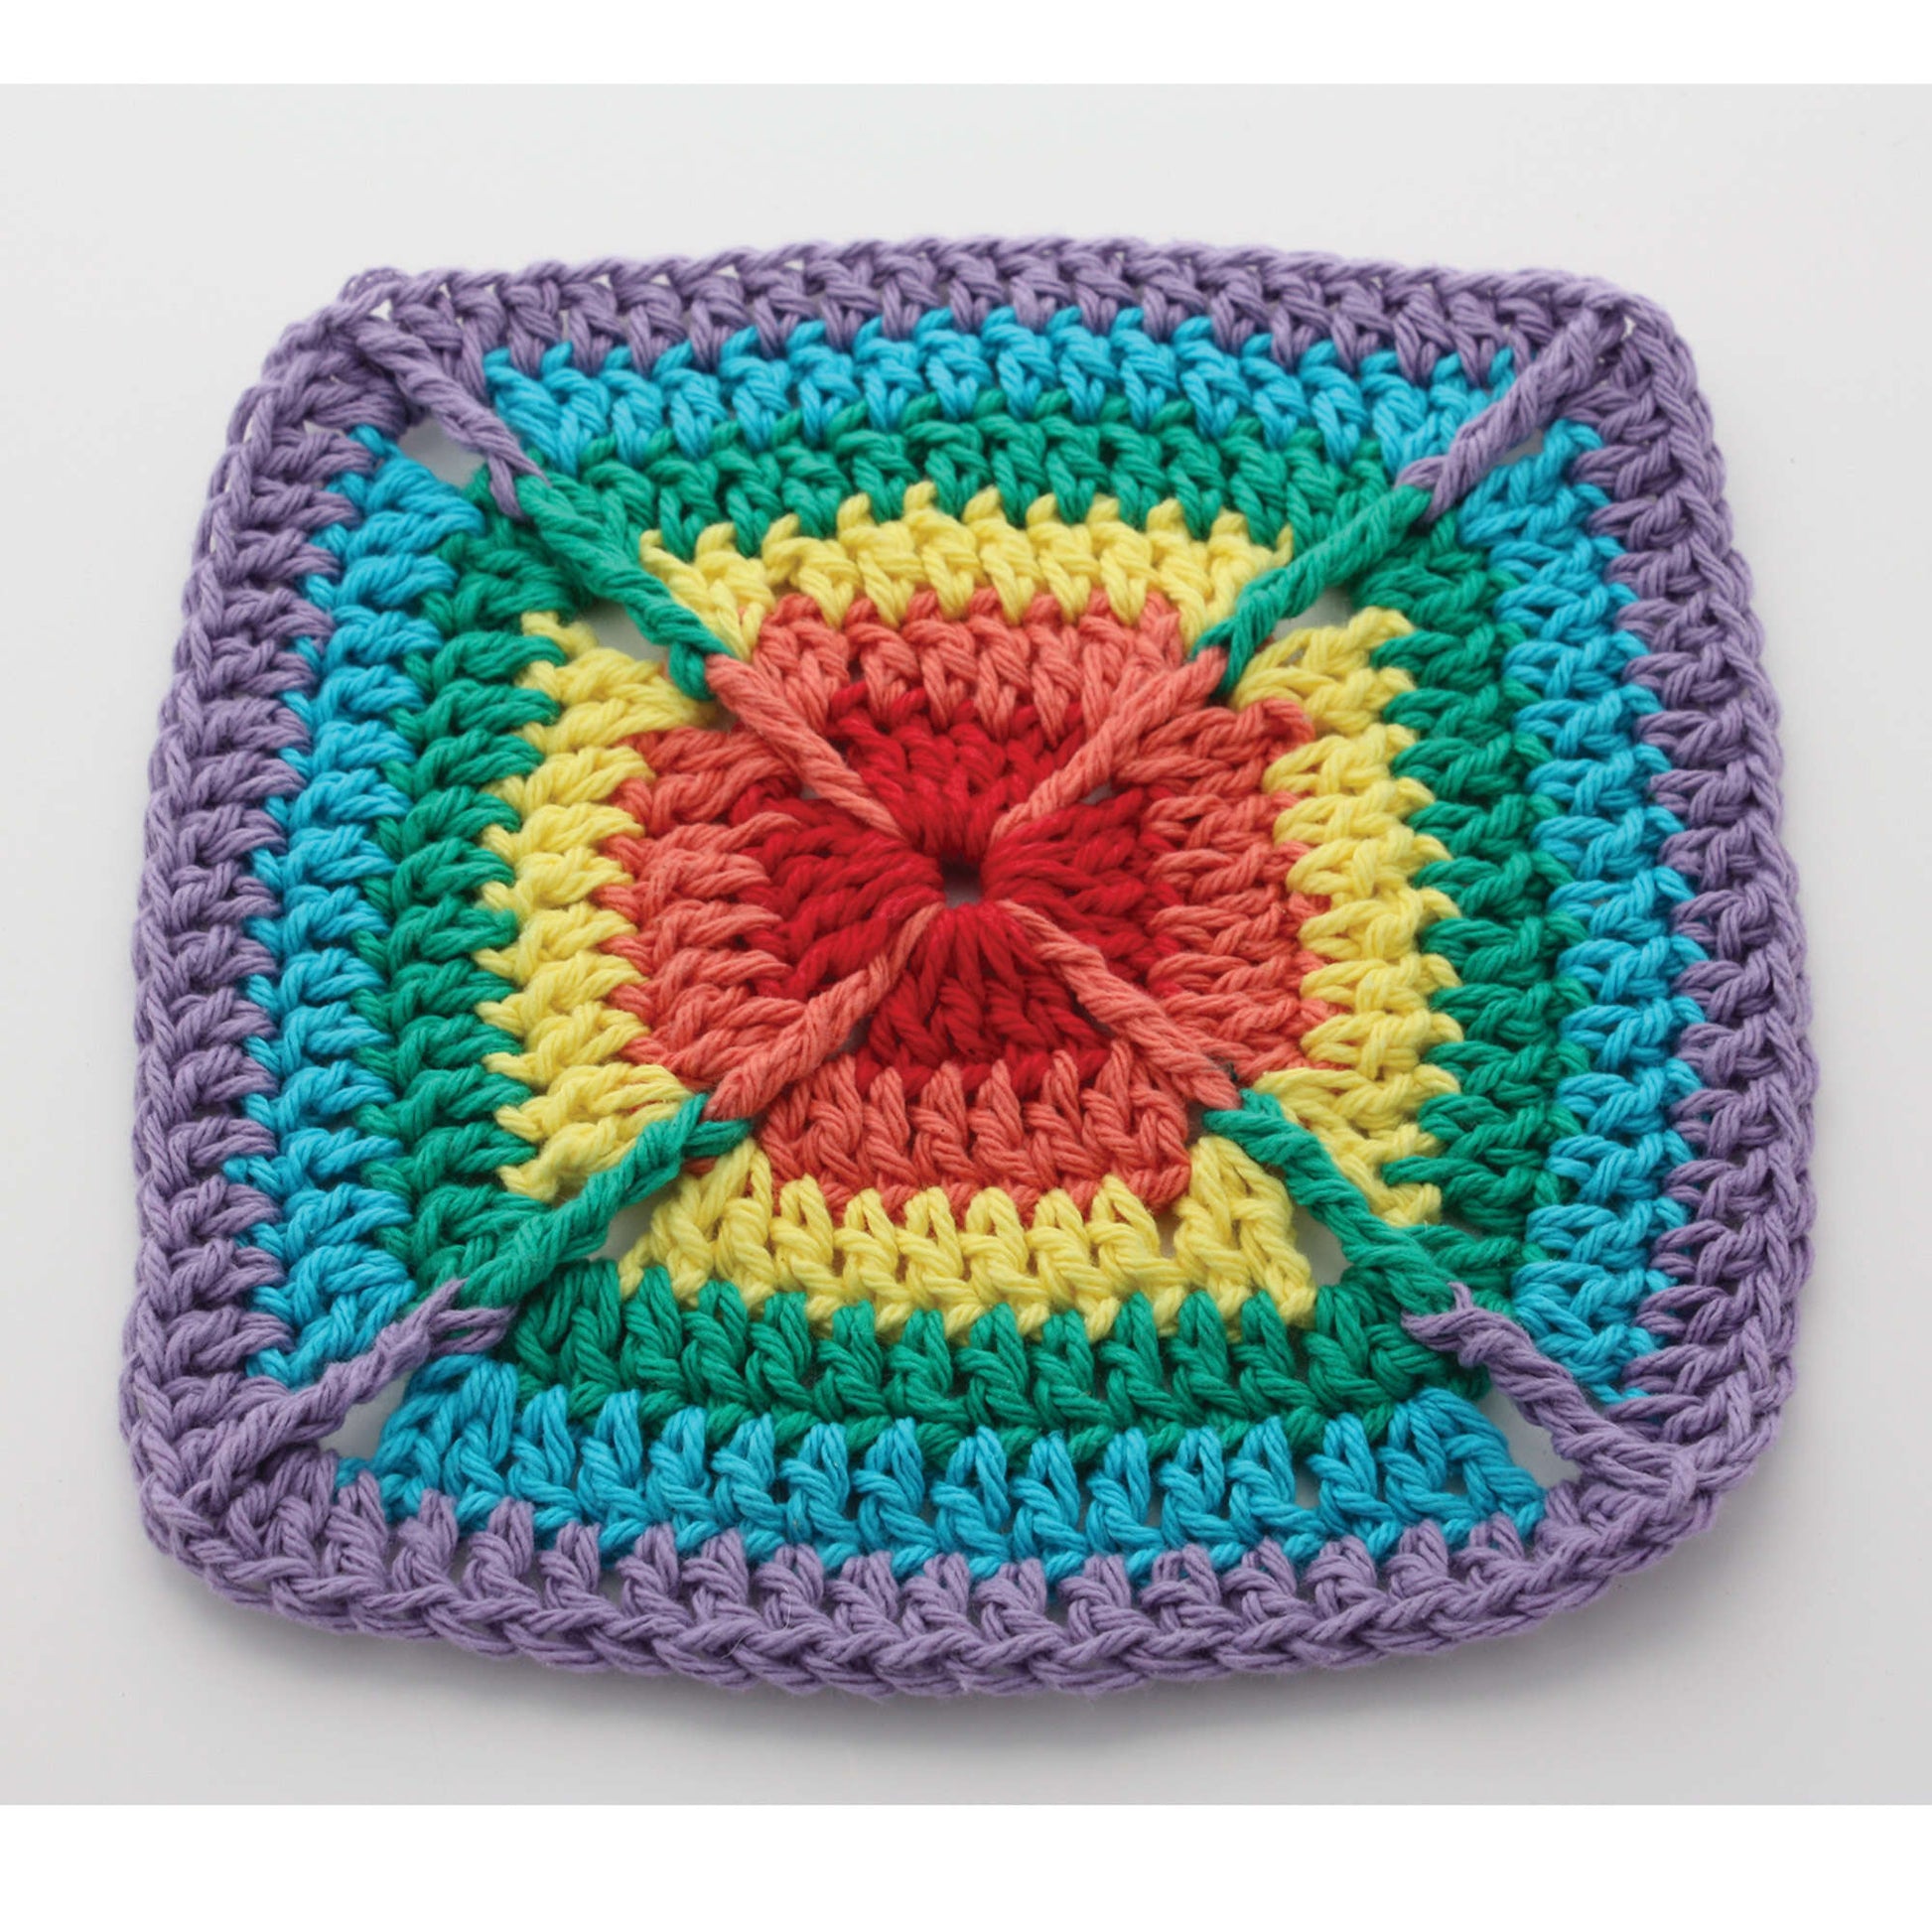 Free Lily Sugar'n Cream Over the Rainbow Dishcloth Crochet Pattern